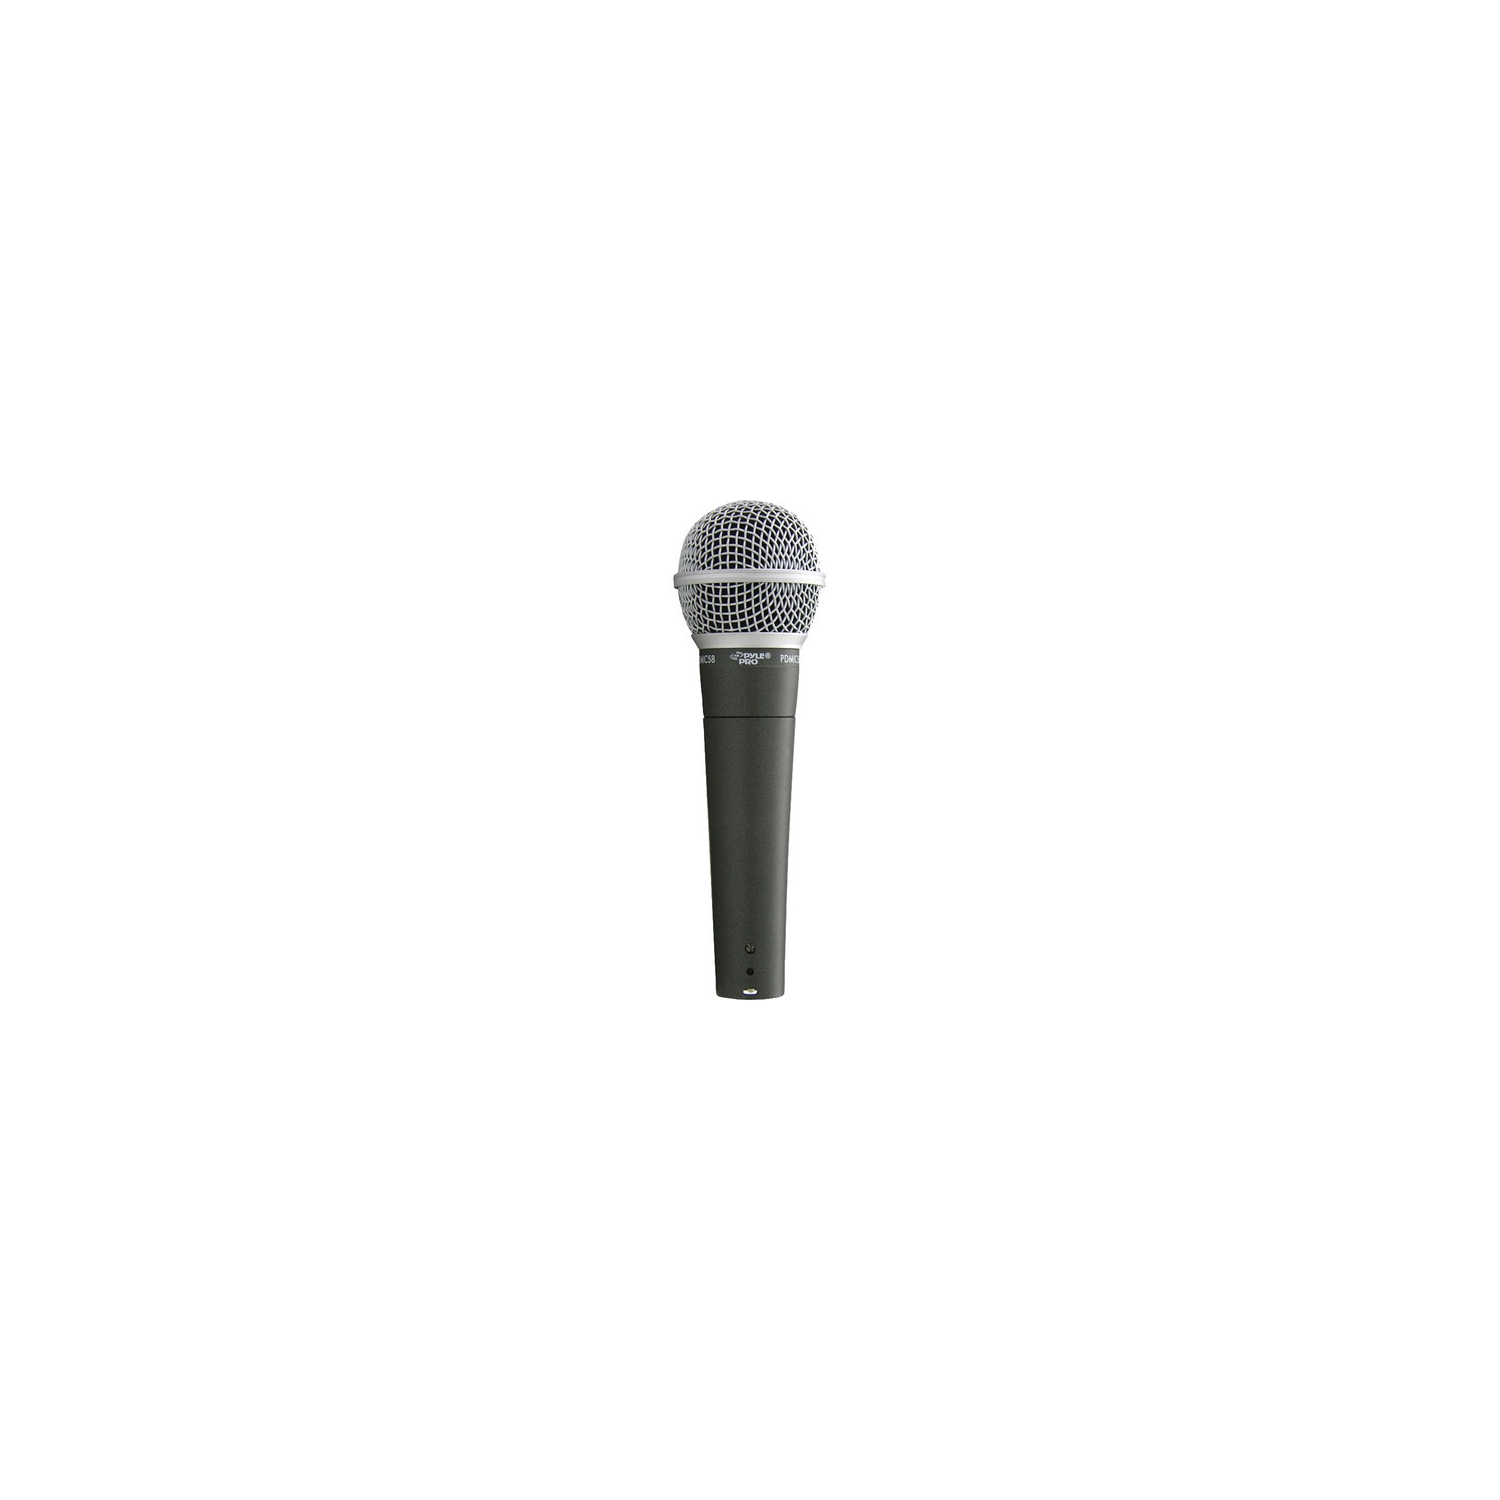 Broco Effacer Portable Bobine Mobile Handheld Filaire Microphone Dynamique Vocal for Karaok/é Noir